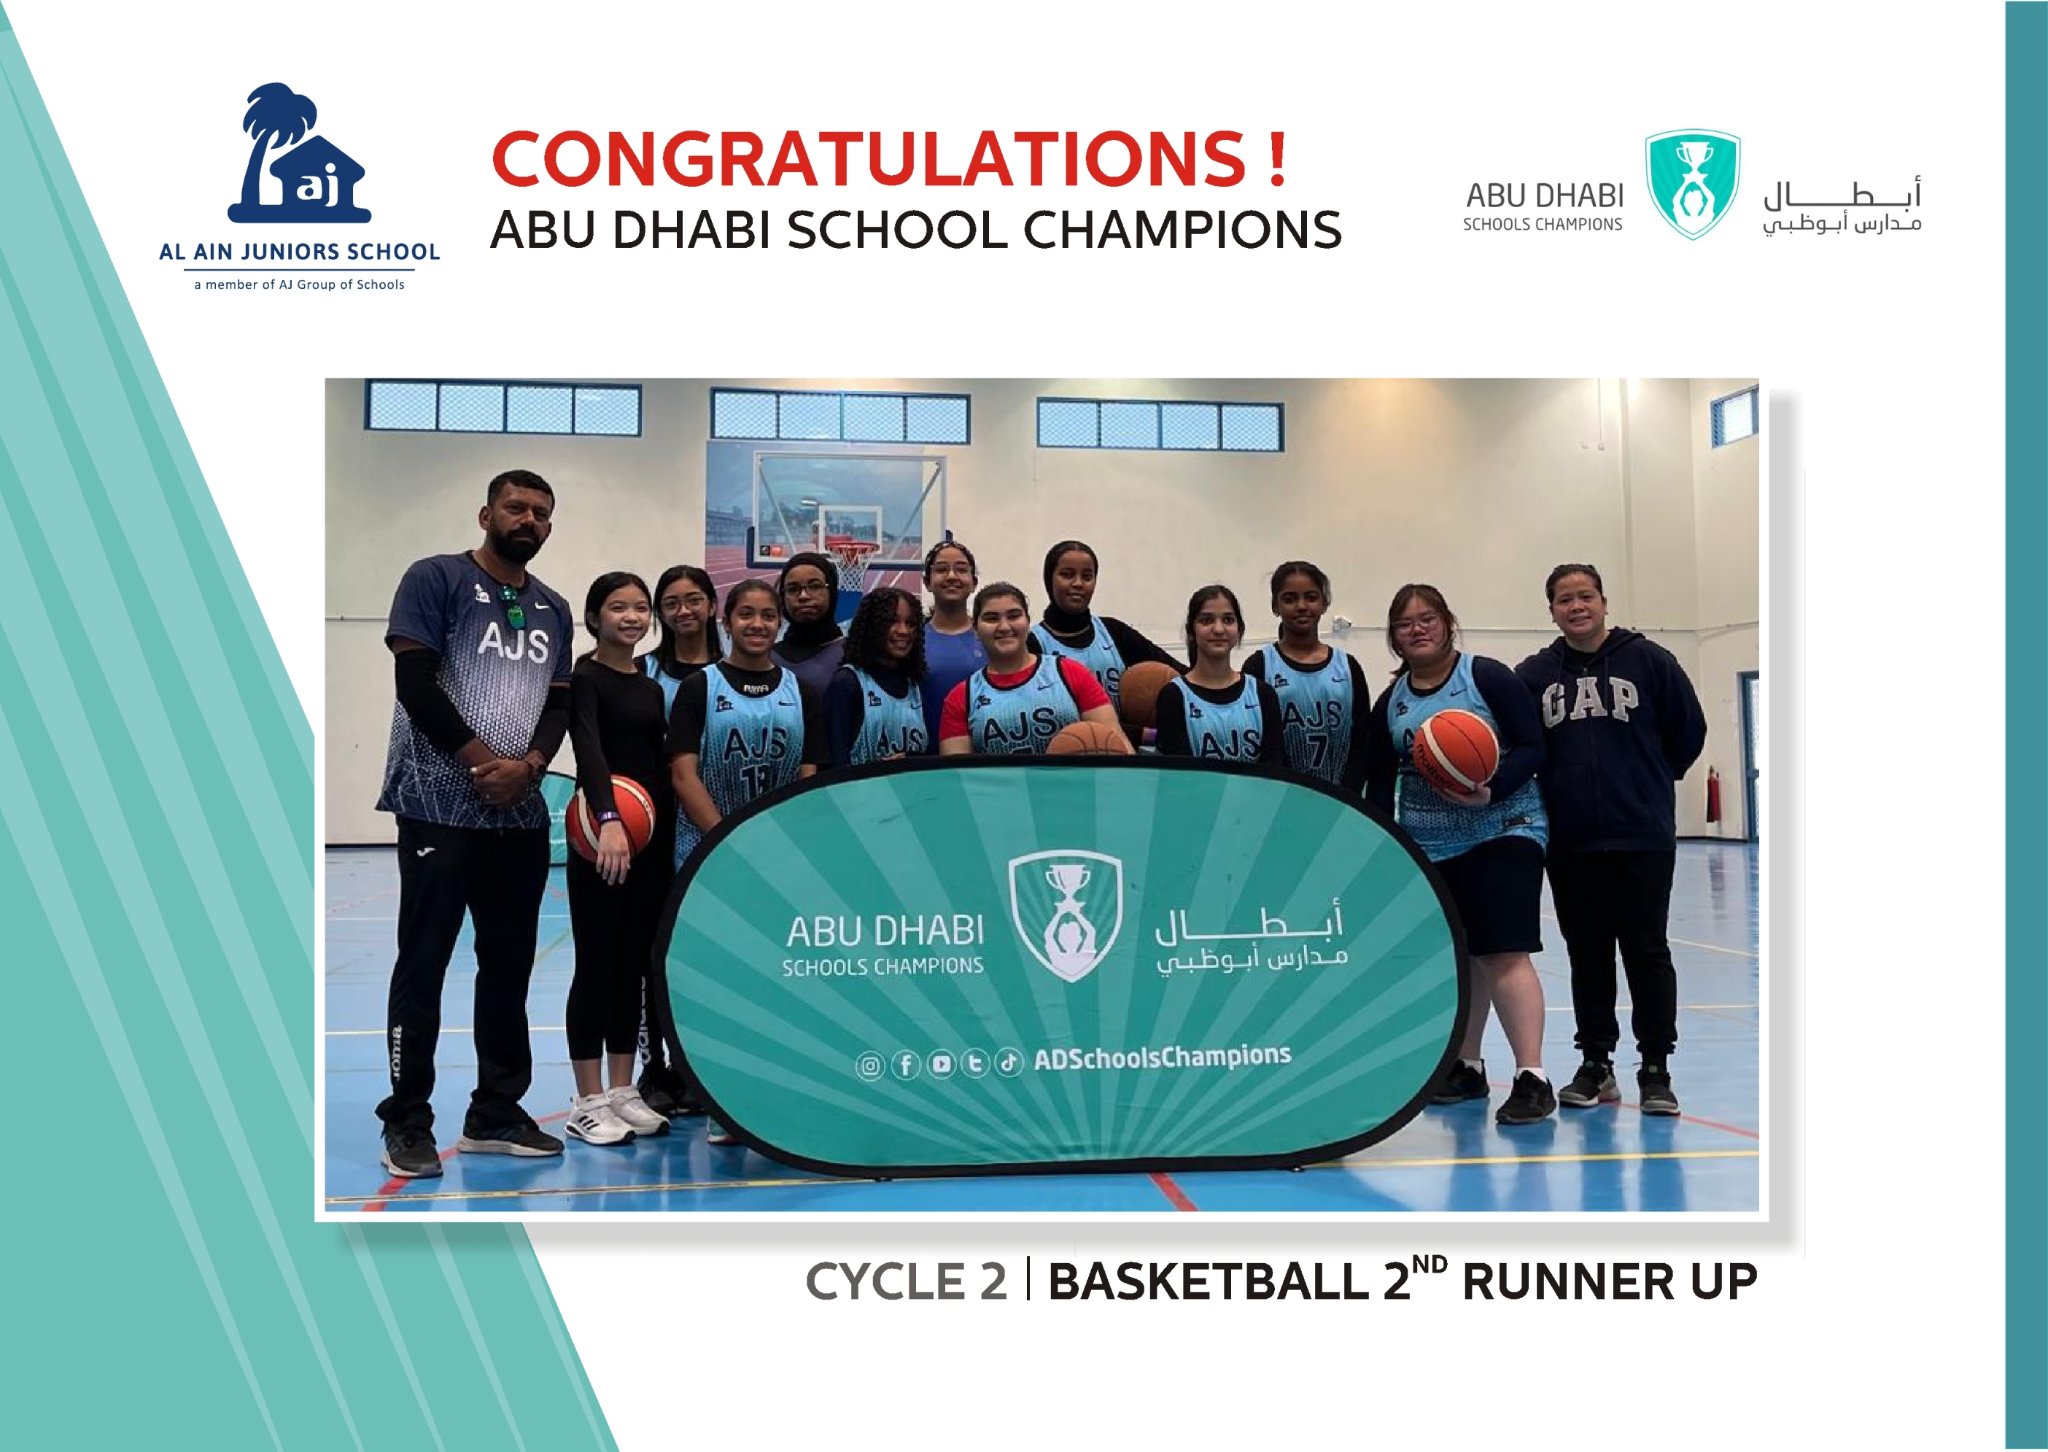 Abu Dhabi Schools Champions 7